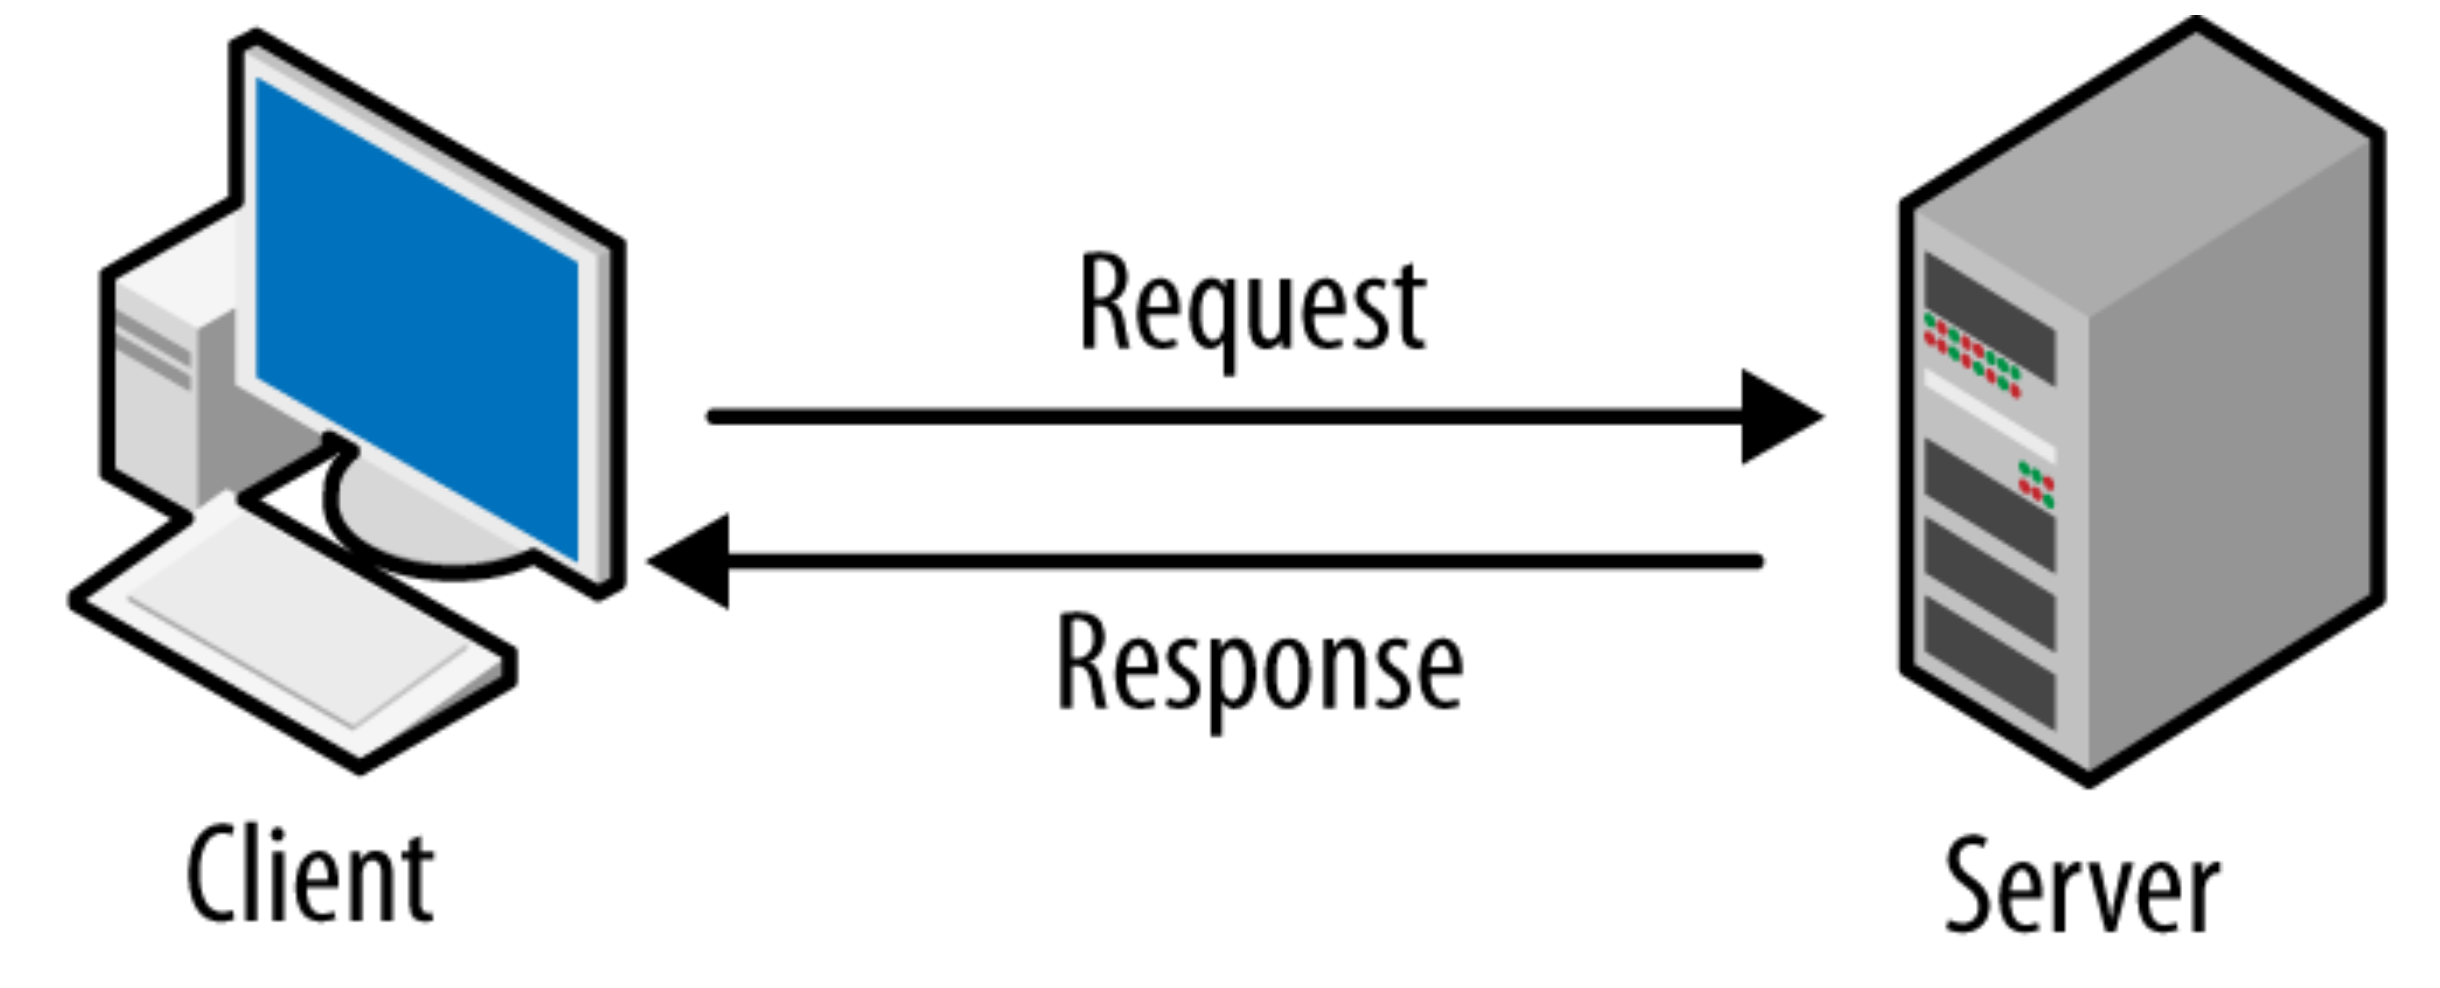 Schematic representation of the client-server architecture